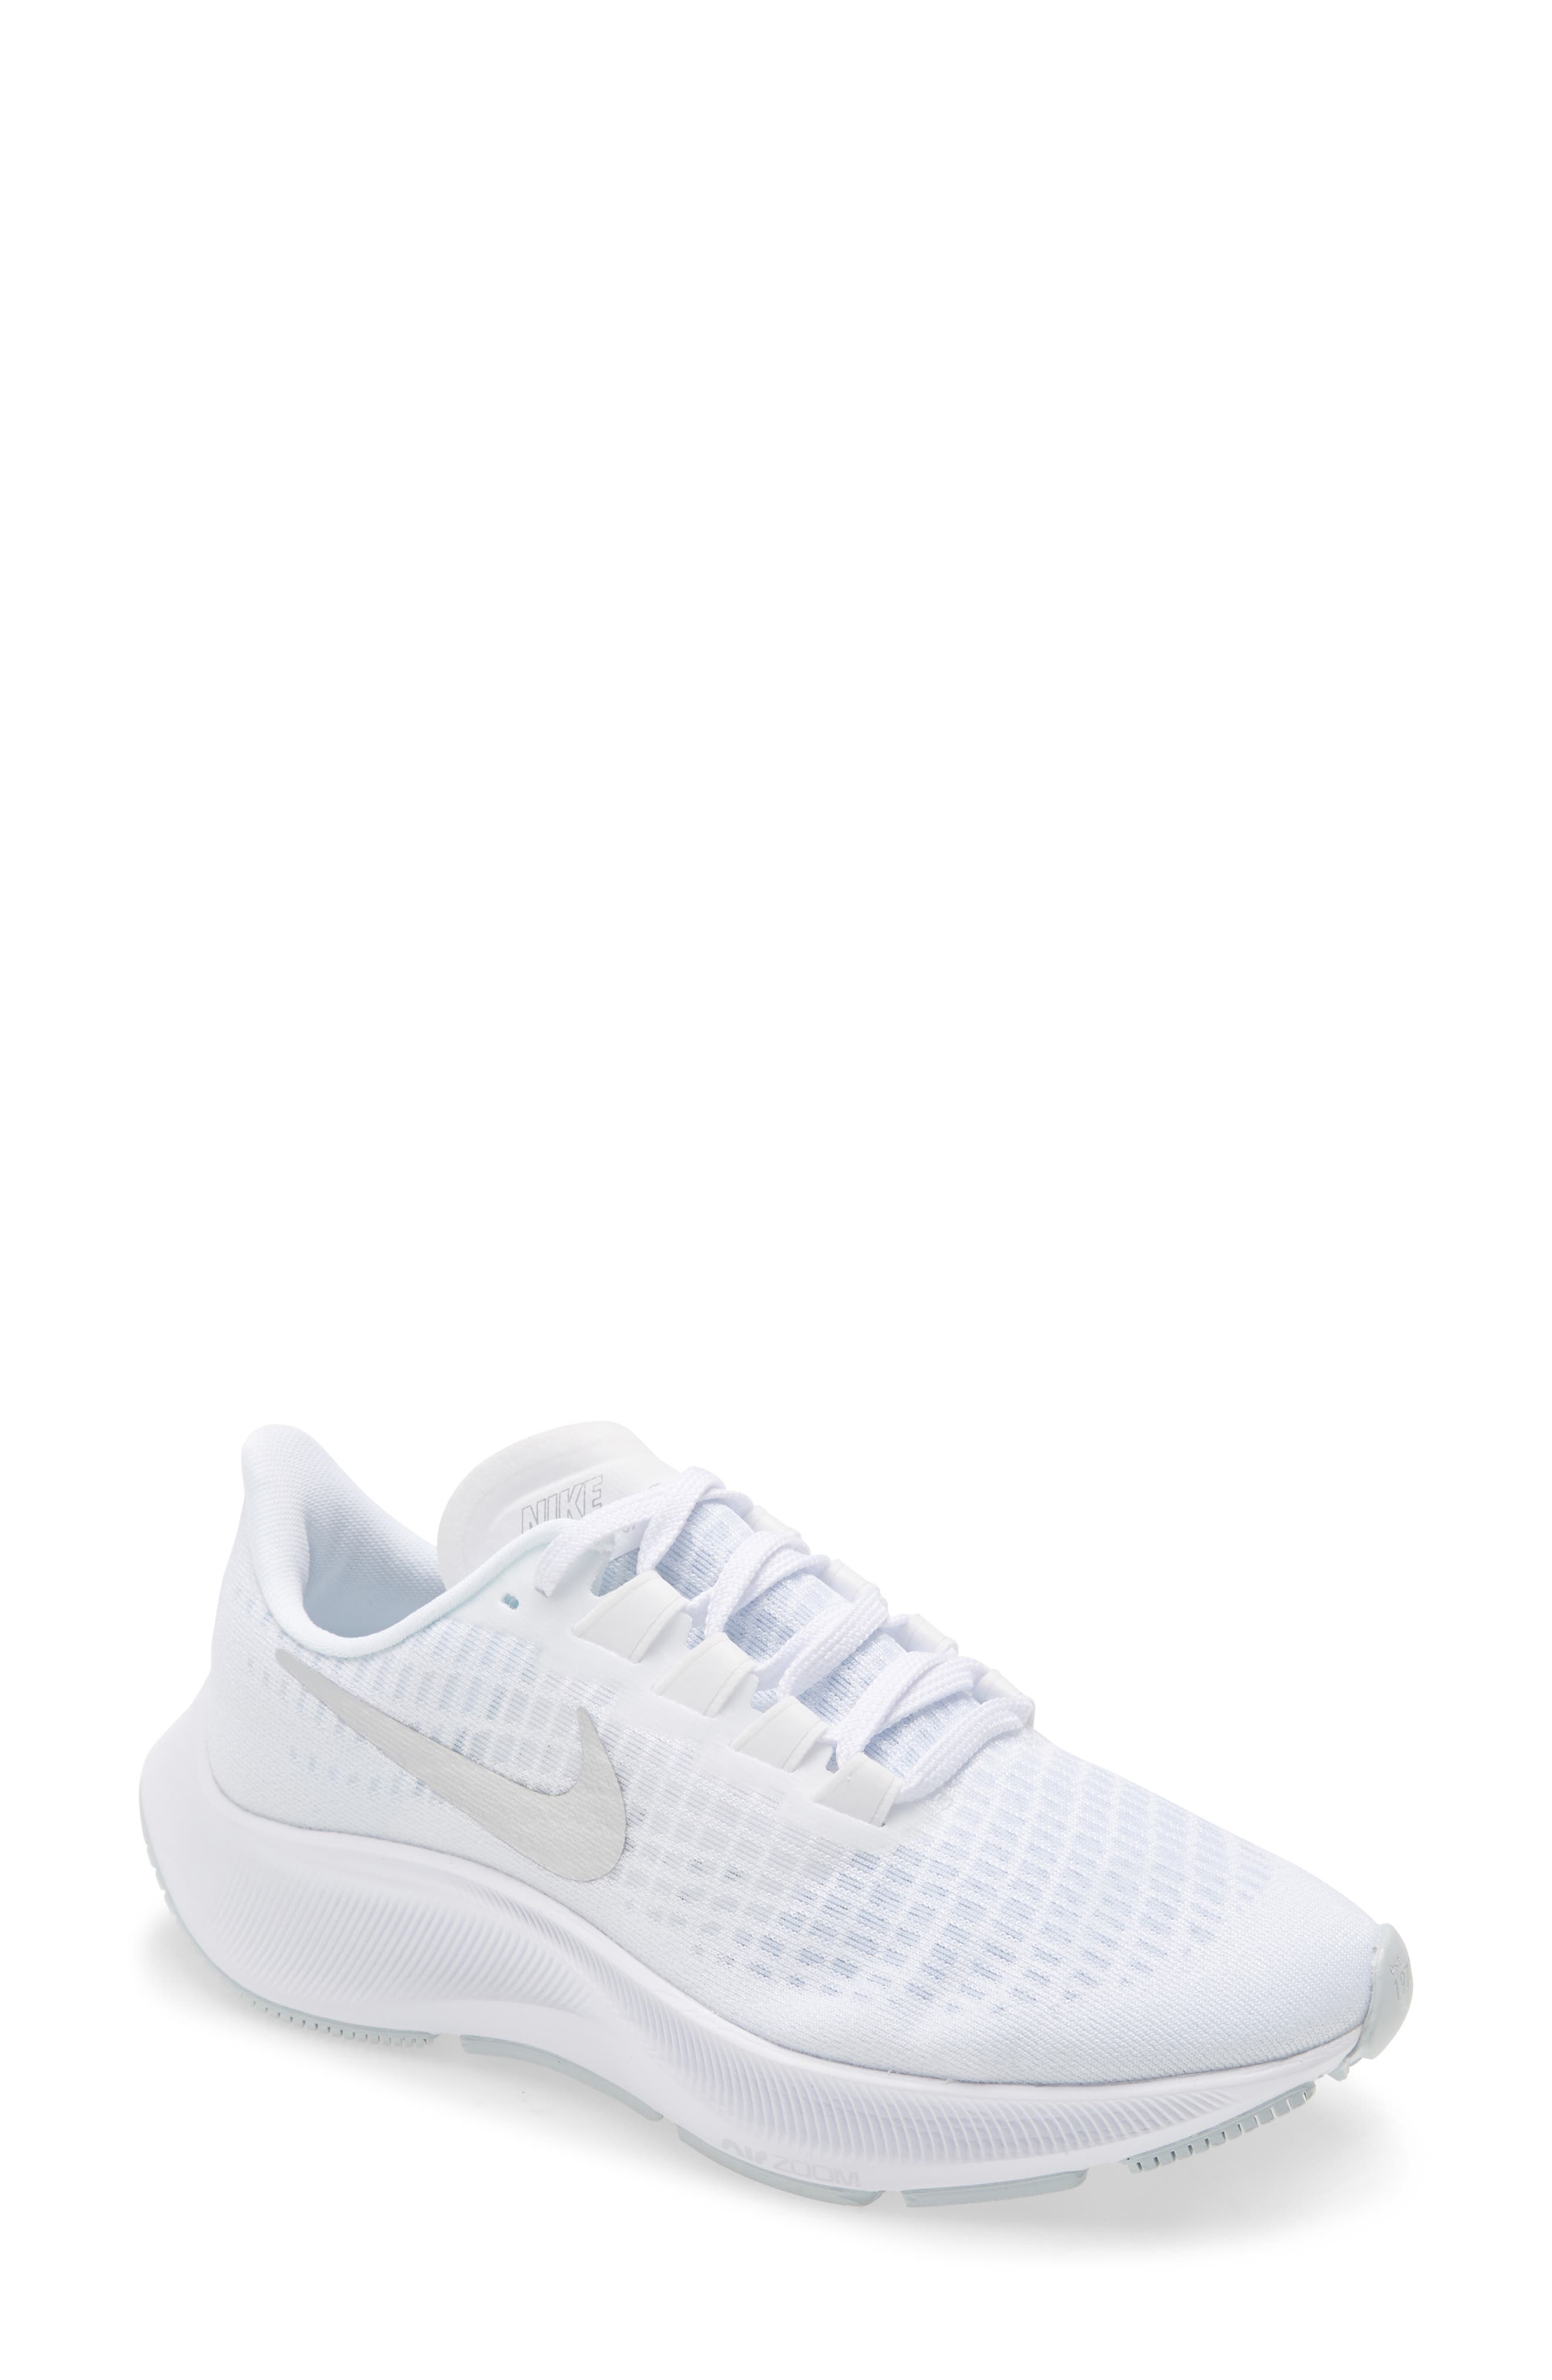 Women's White Nike Shoes | Nordstrom